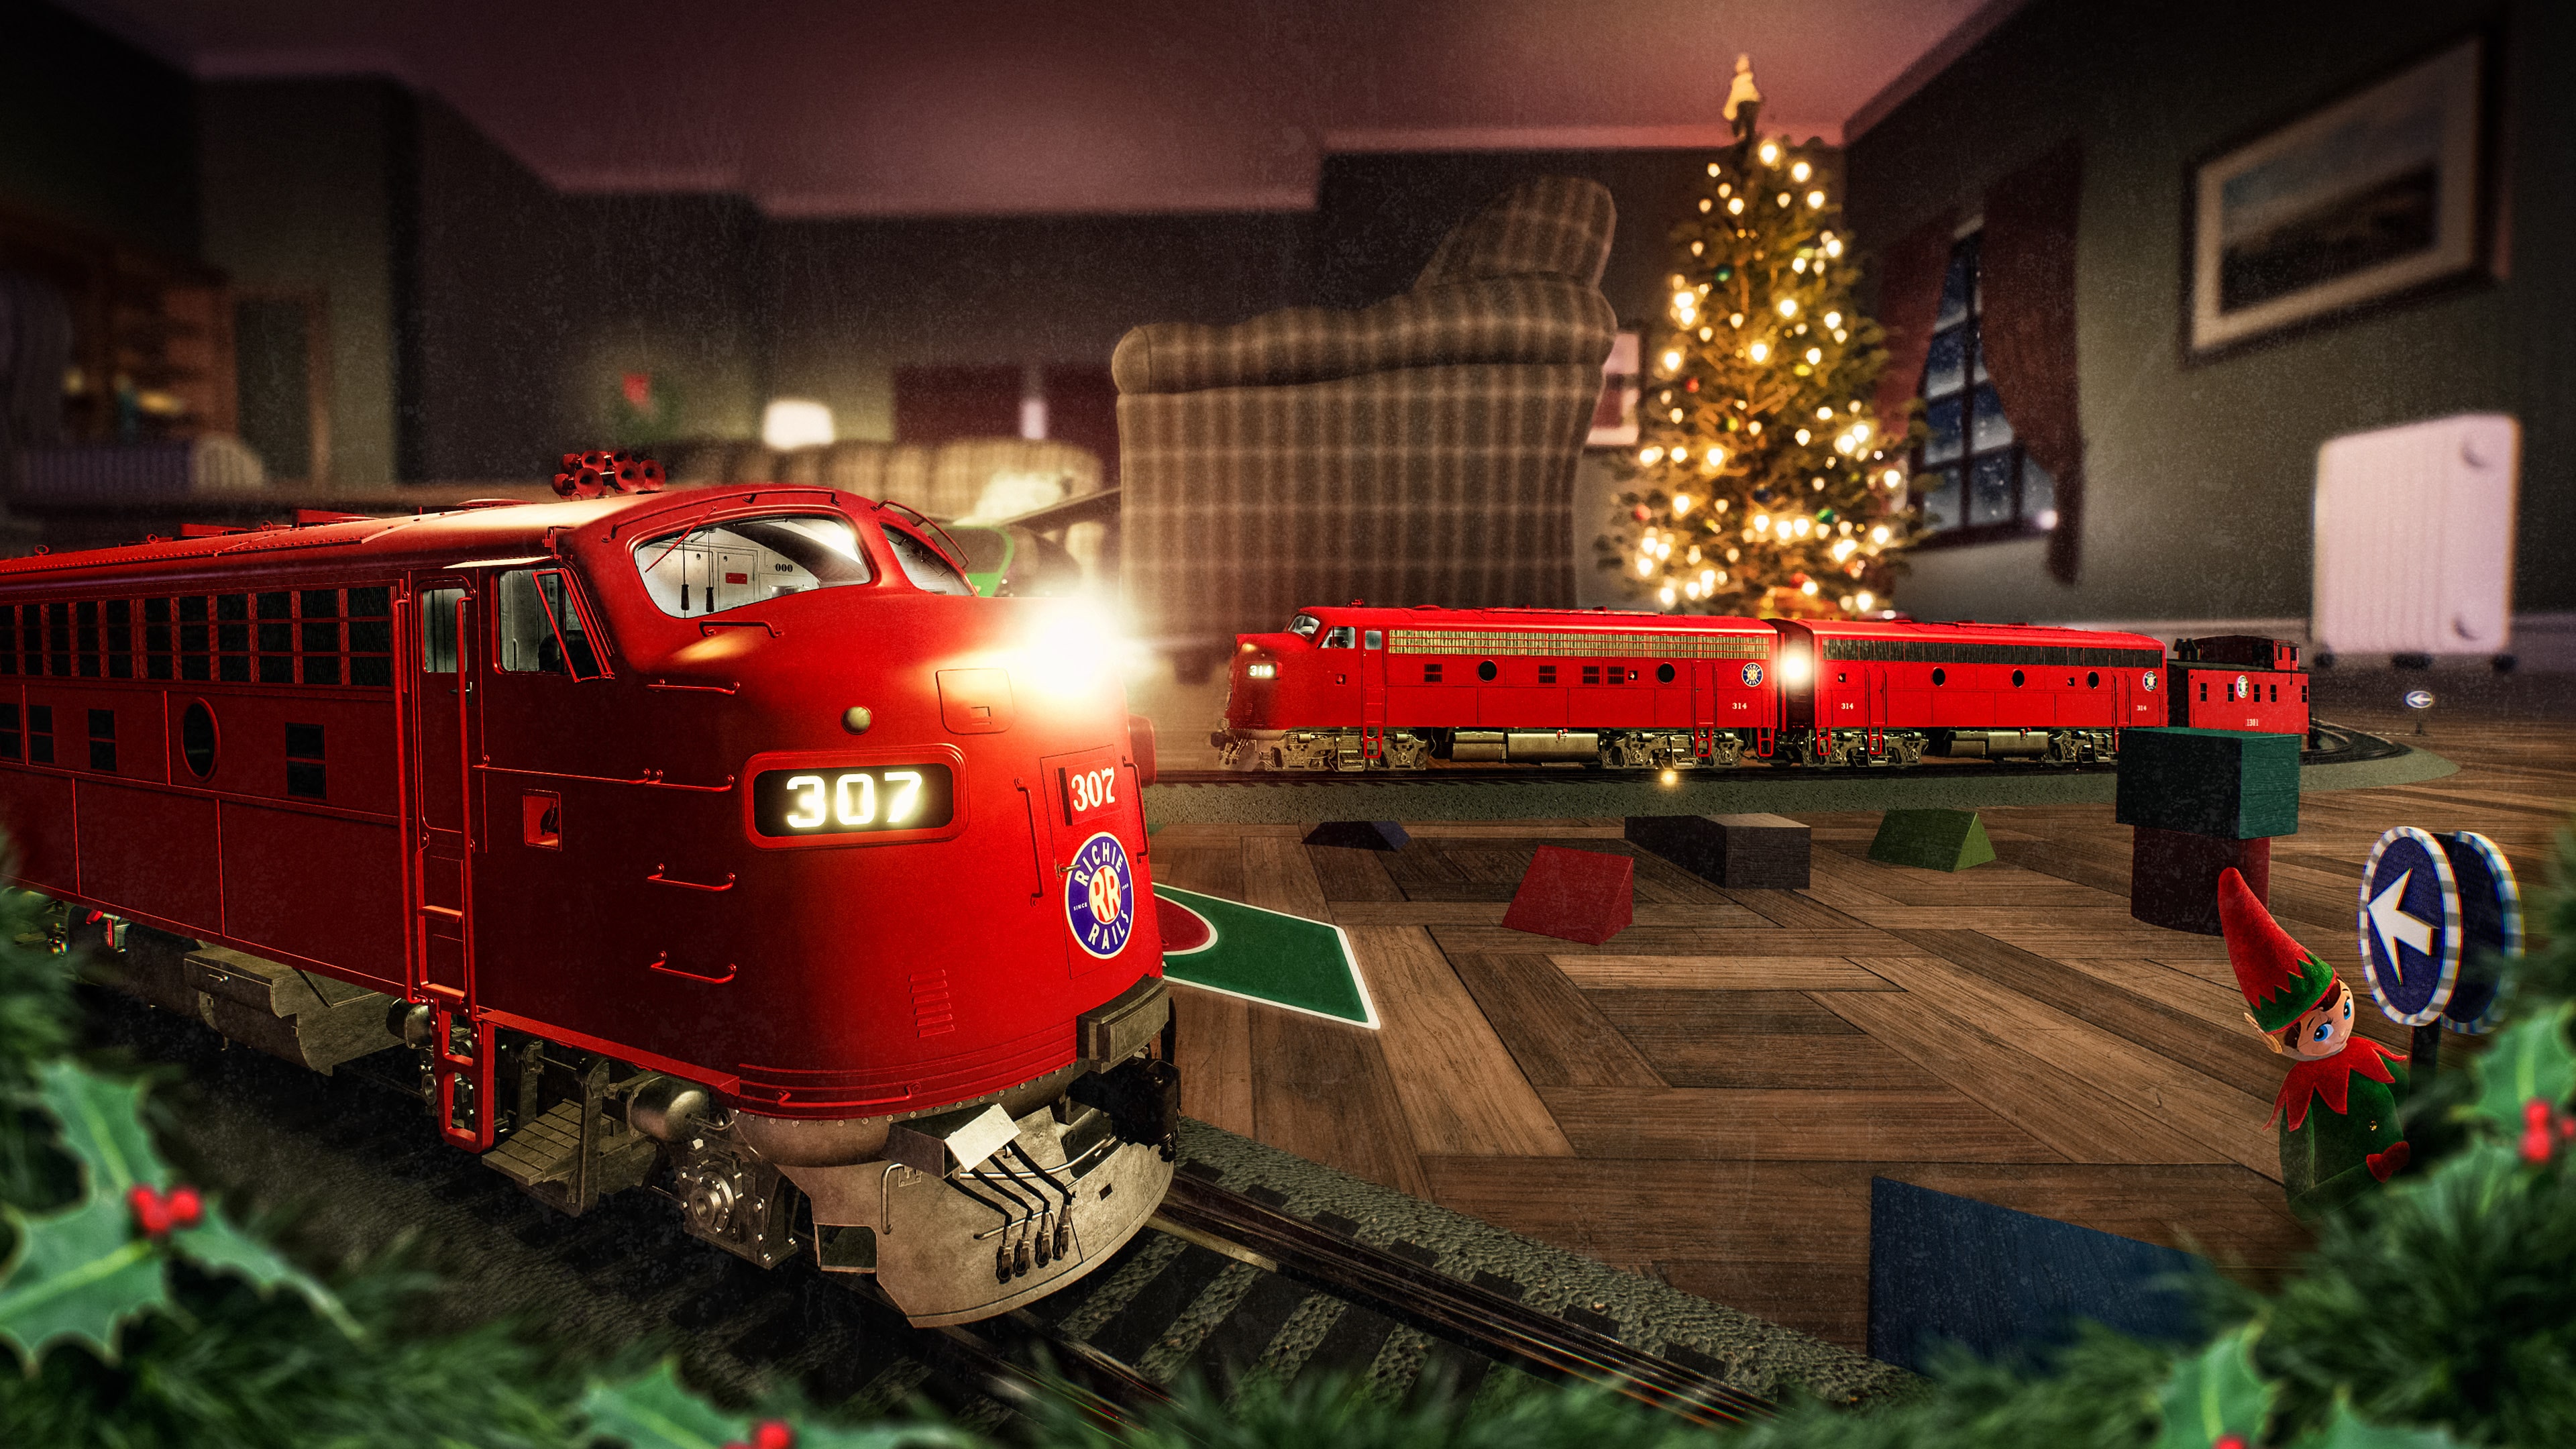 Train Sim World® 3: The Holiday Express - Runaway Elf